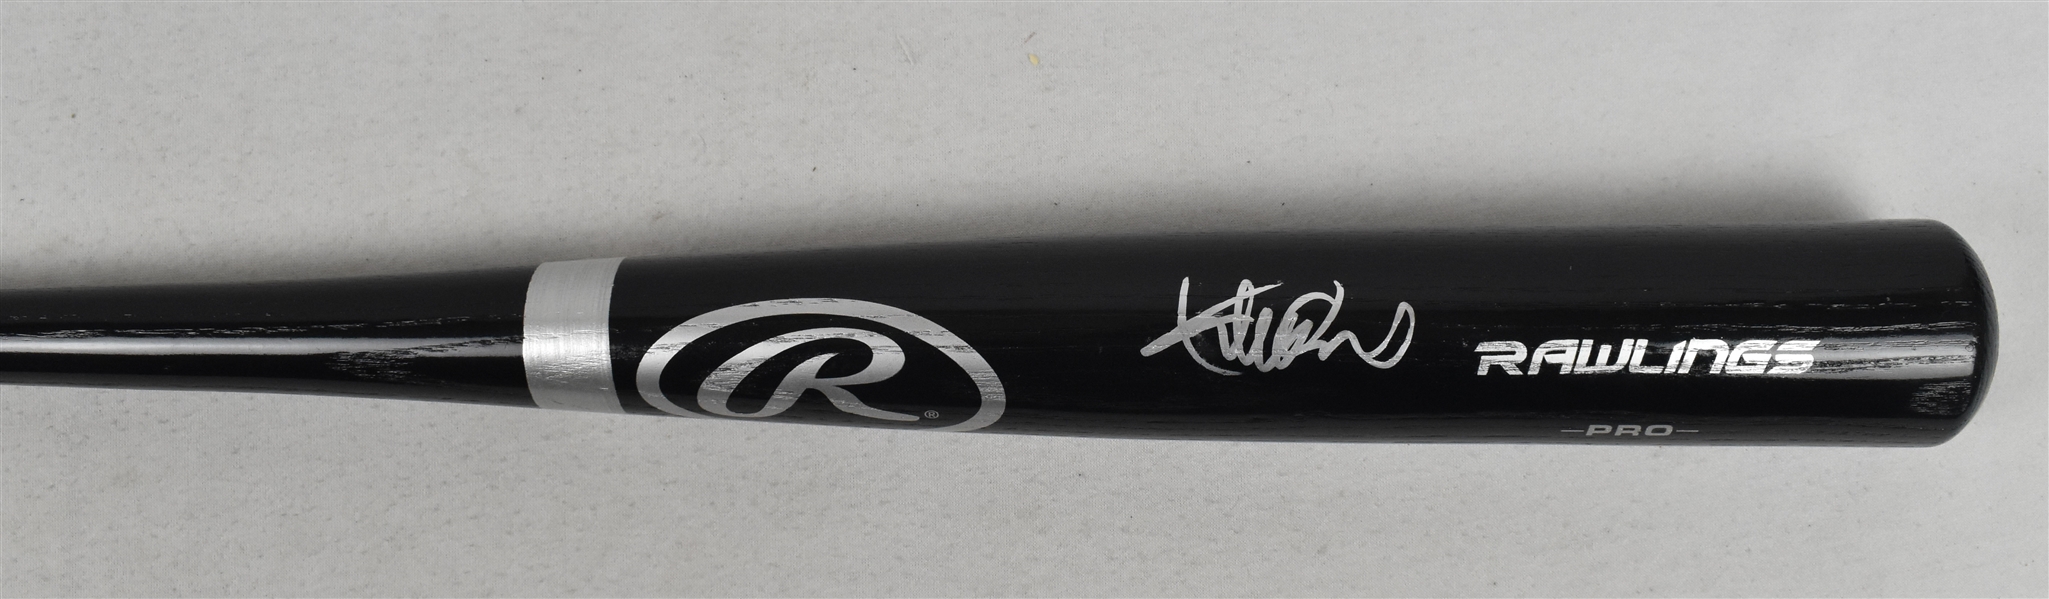 Ichiro Suzuki Autographed Bat 